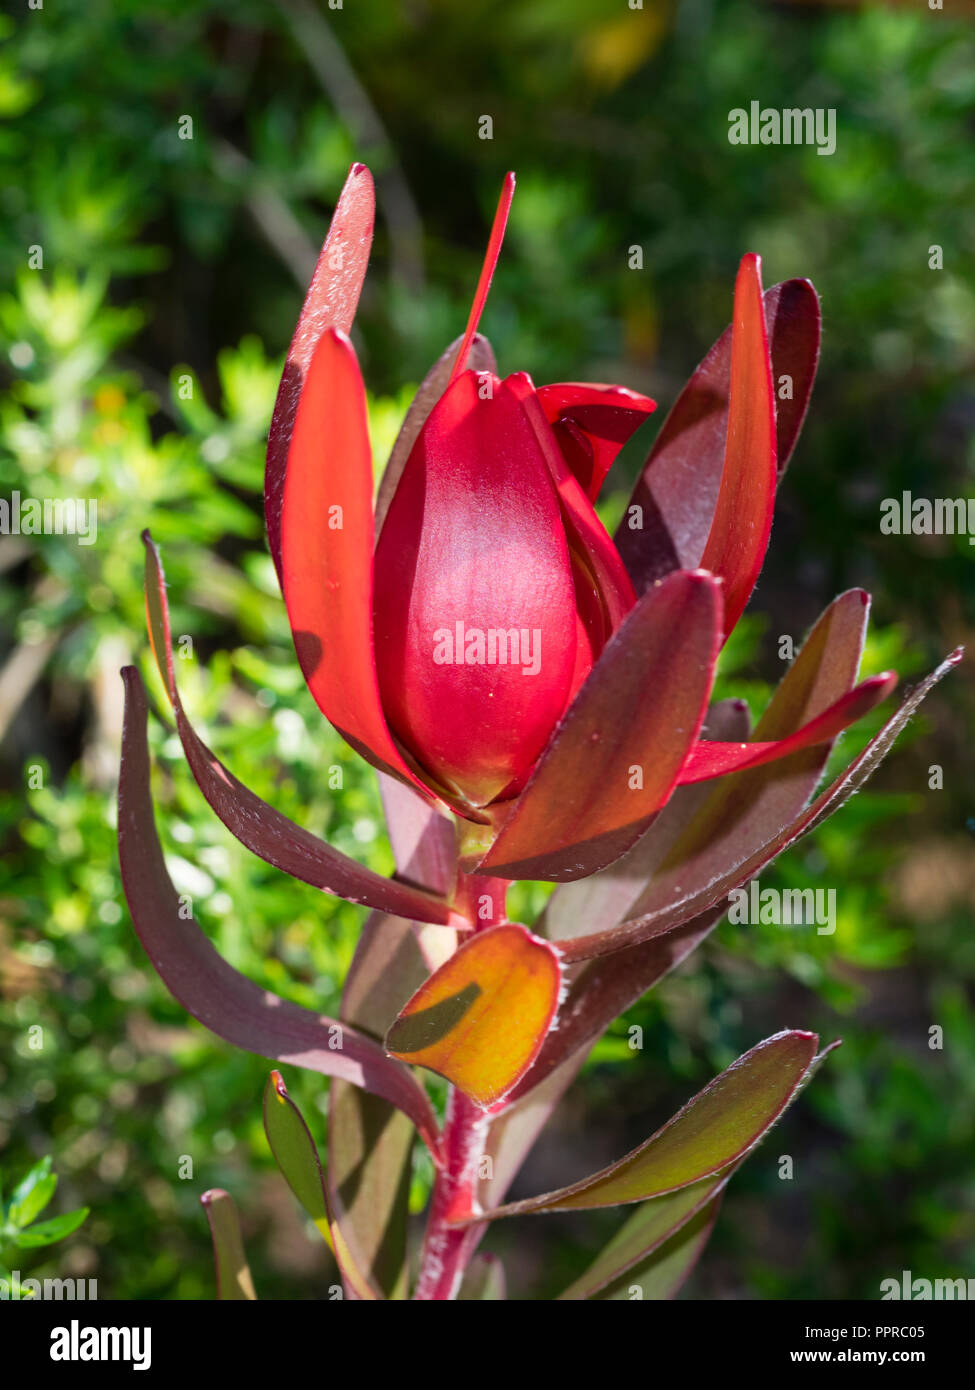 Long lasting red bracts enclose the autumn to winter flowers of the tender evergreen shrub, Leucadendron 'Safari Sunset', a Leucadendron laureolum hyb Stock Photo